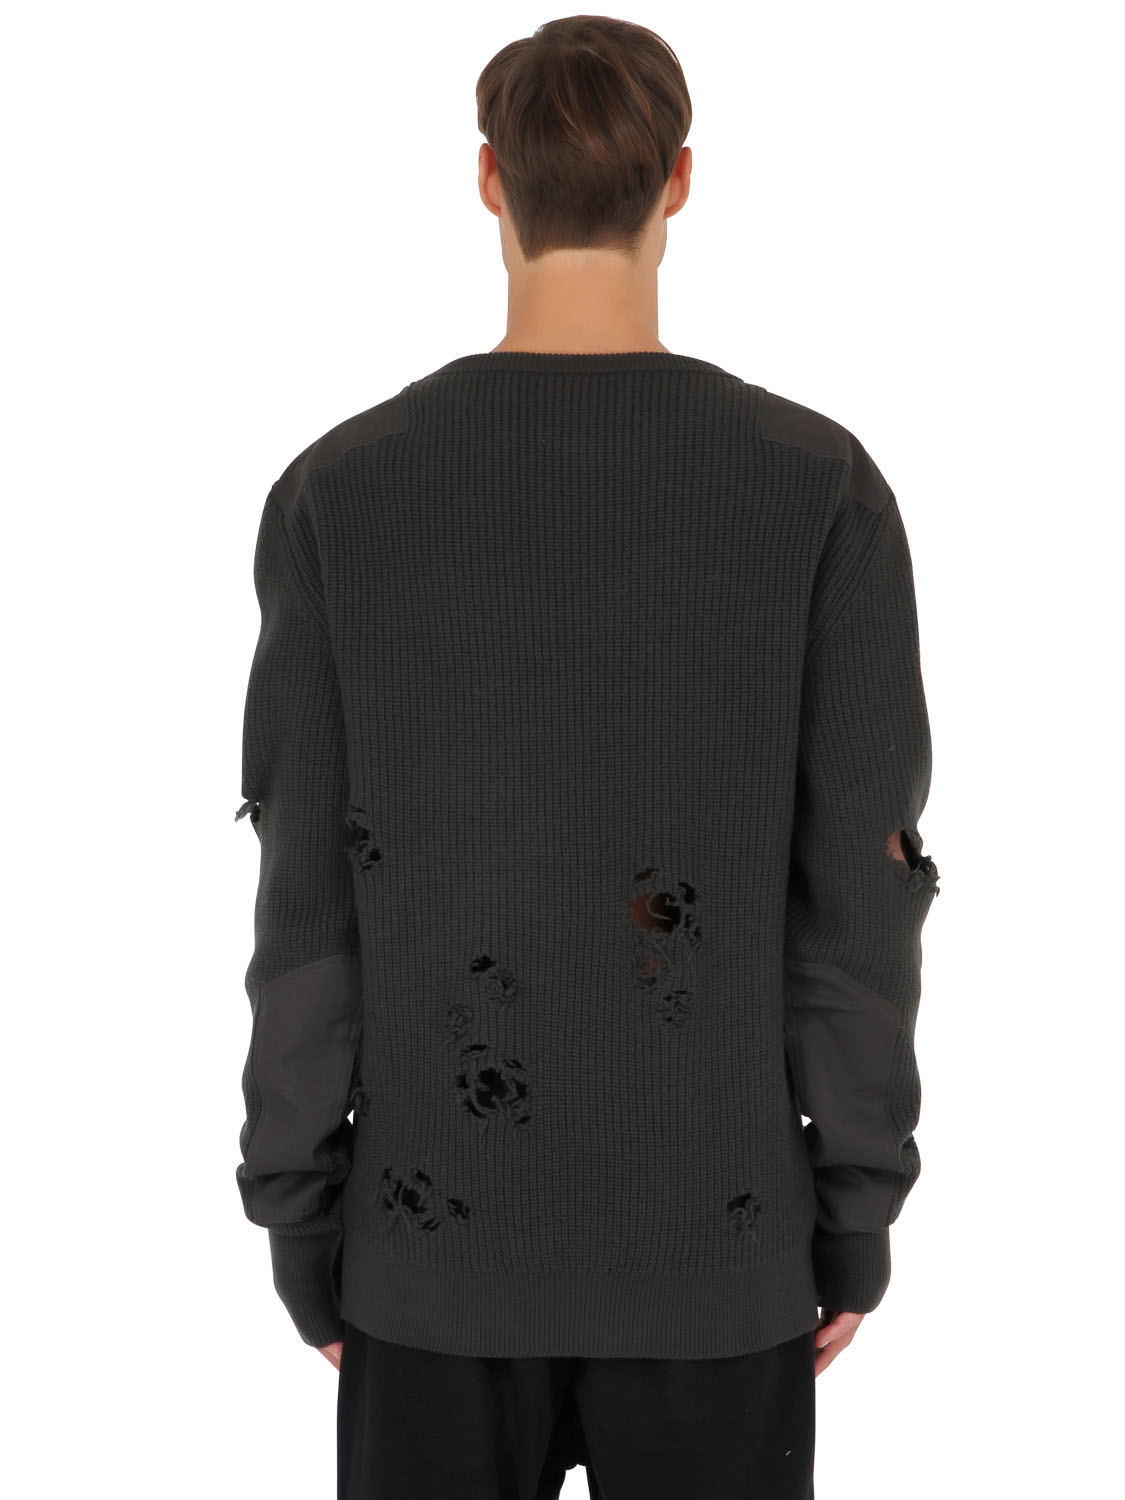 Lyst - Yeezy Destroyed Wool Sweater in Black for Men